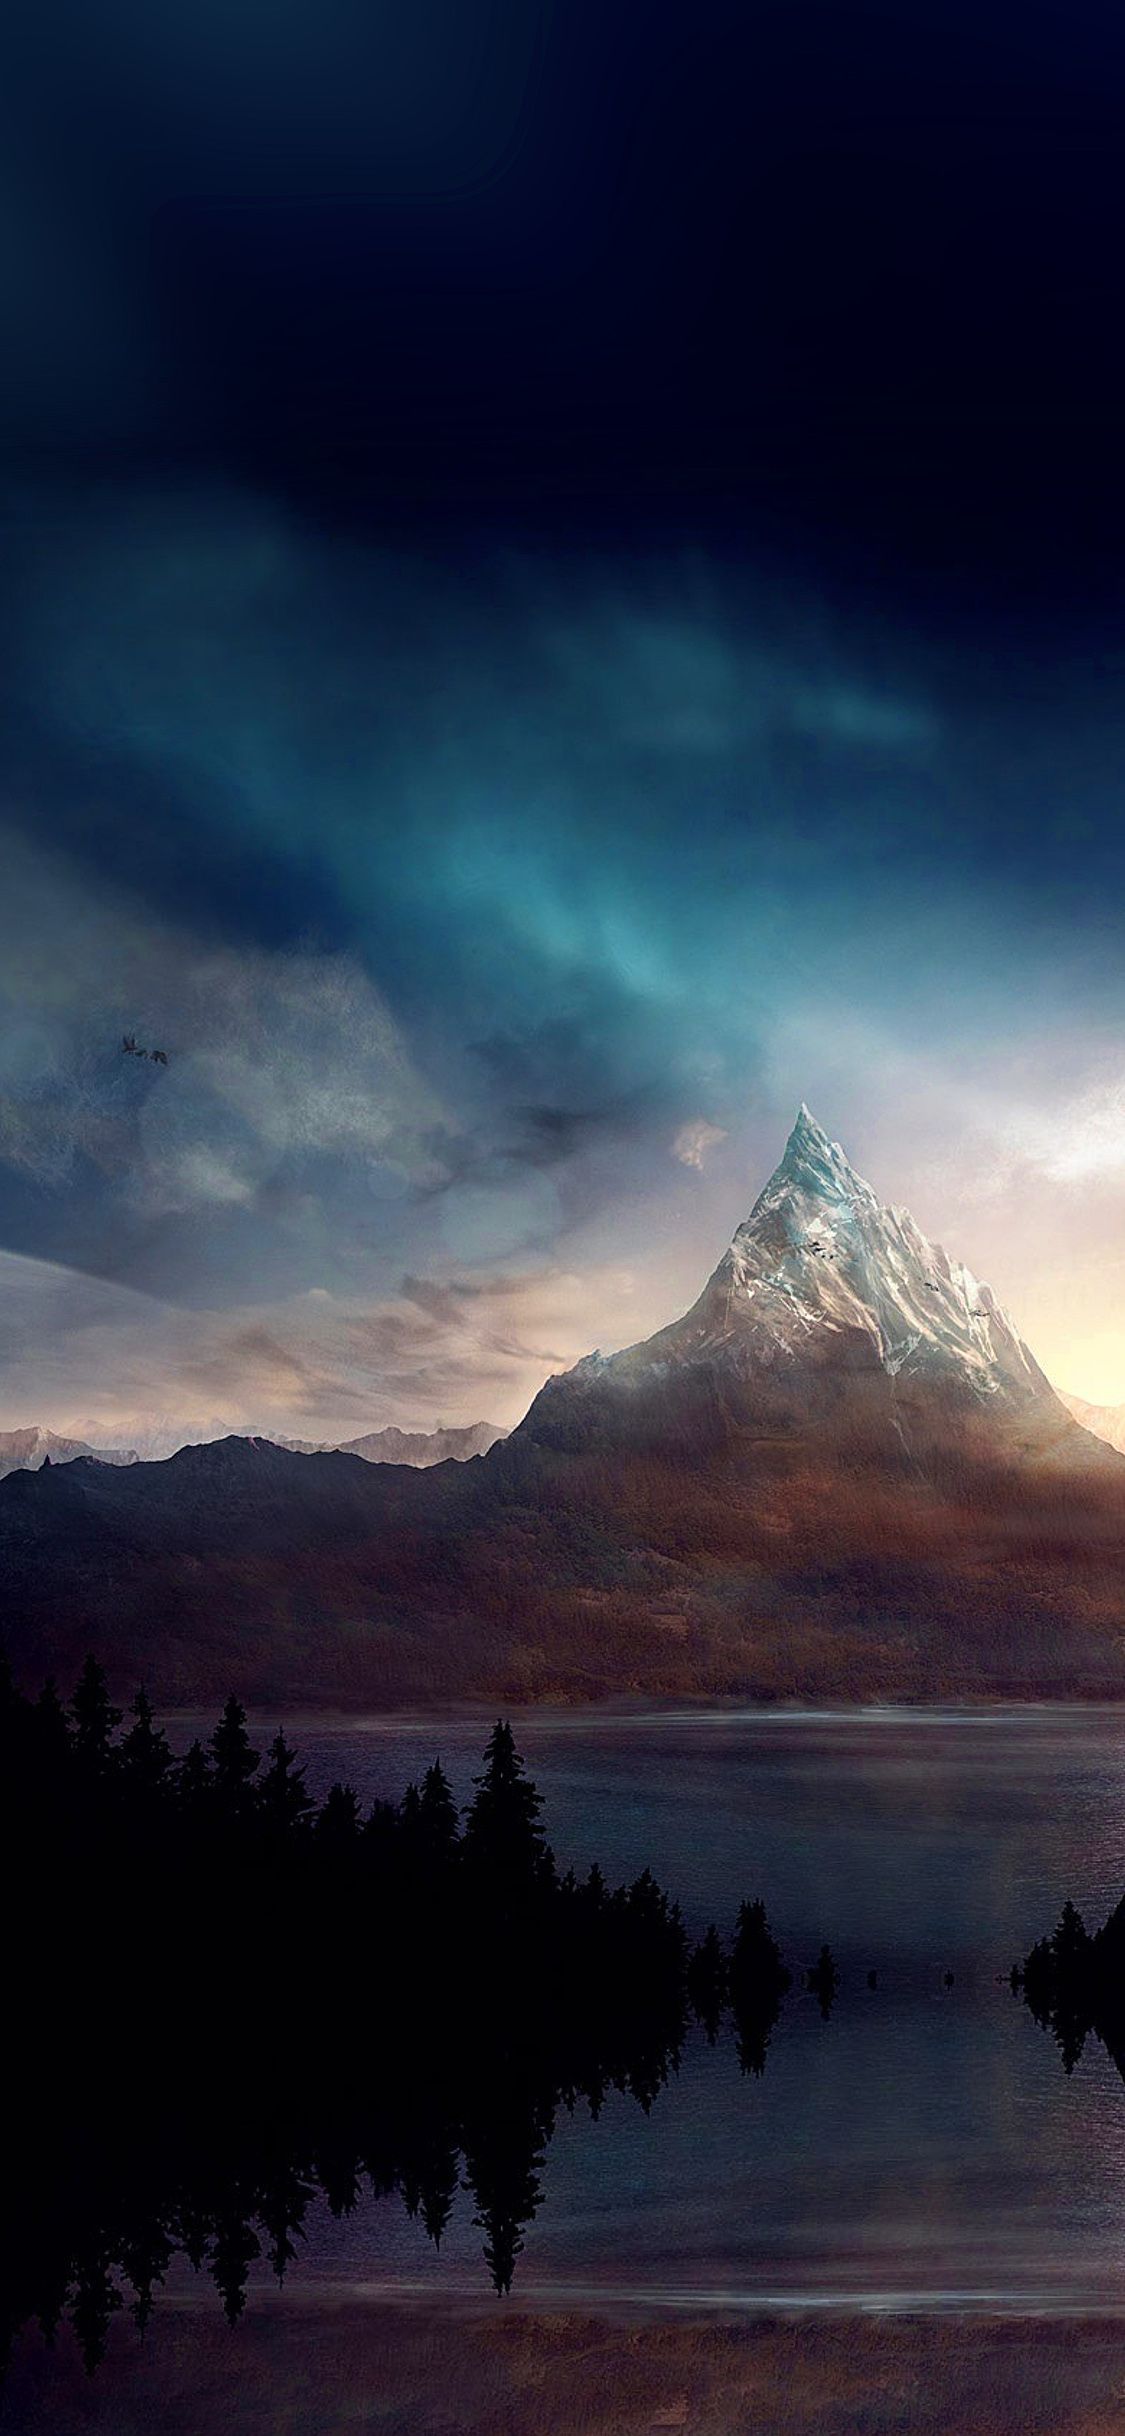 iPhone X wallpaper. mountain nature fantasy art illustration